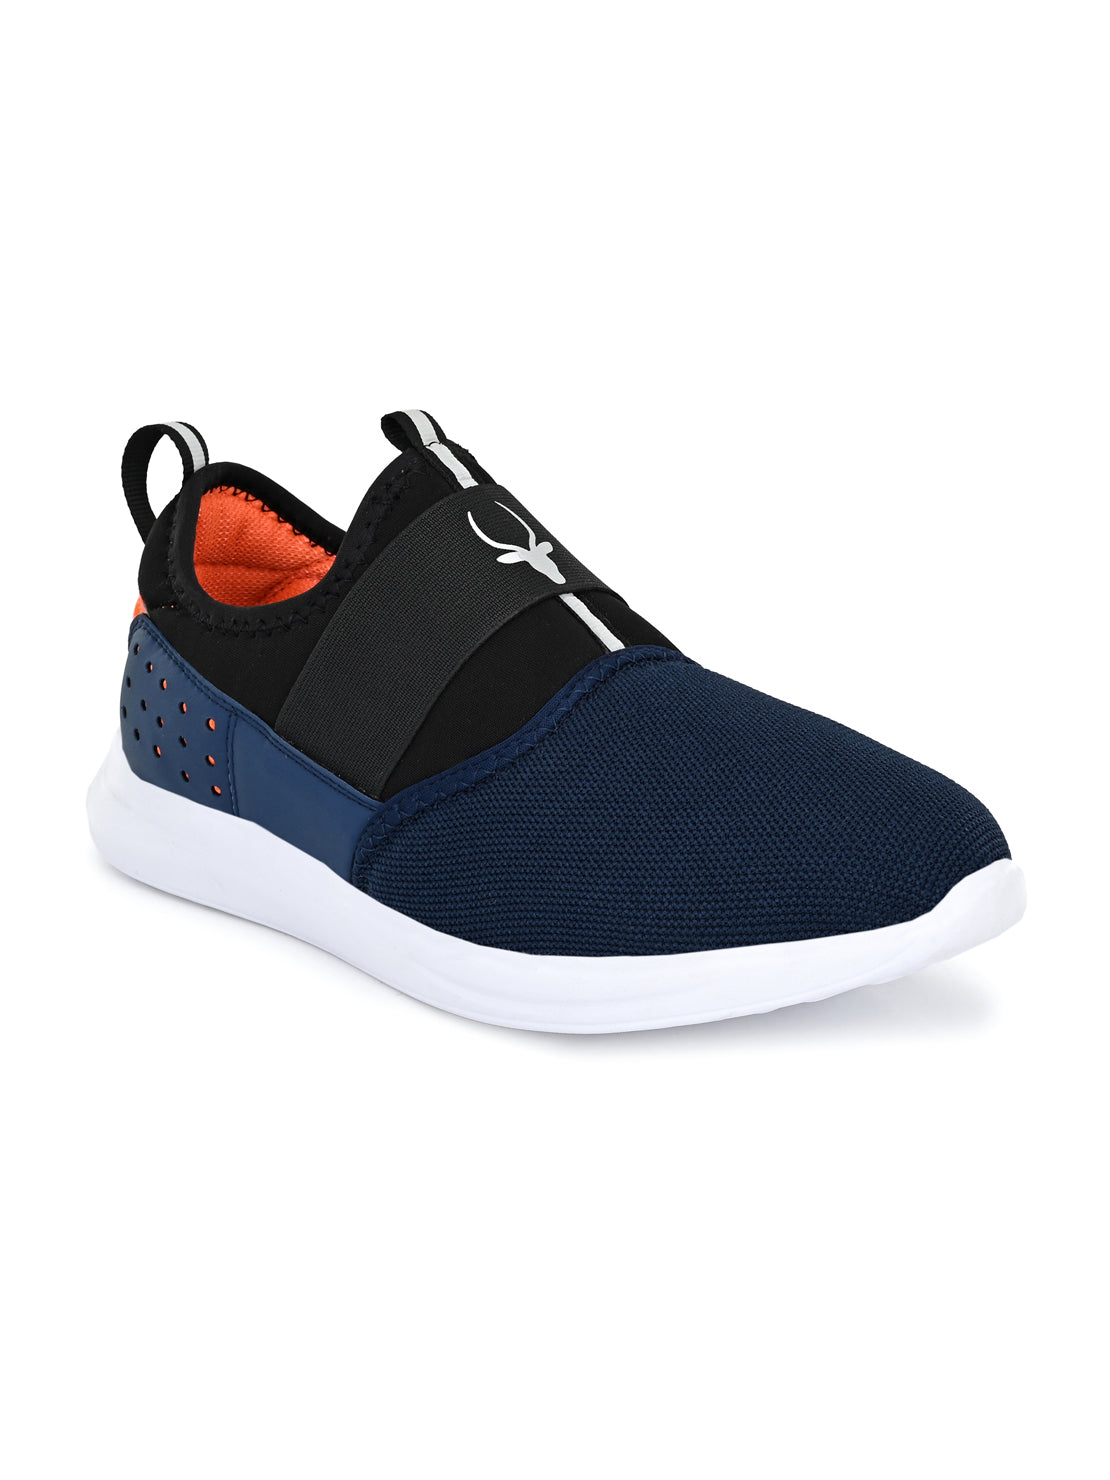 Hirolas® Men's Blue Mesh Running/Walking/Gym Slip On Sneaker Sport Shoes (HRL2027BLU)